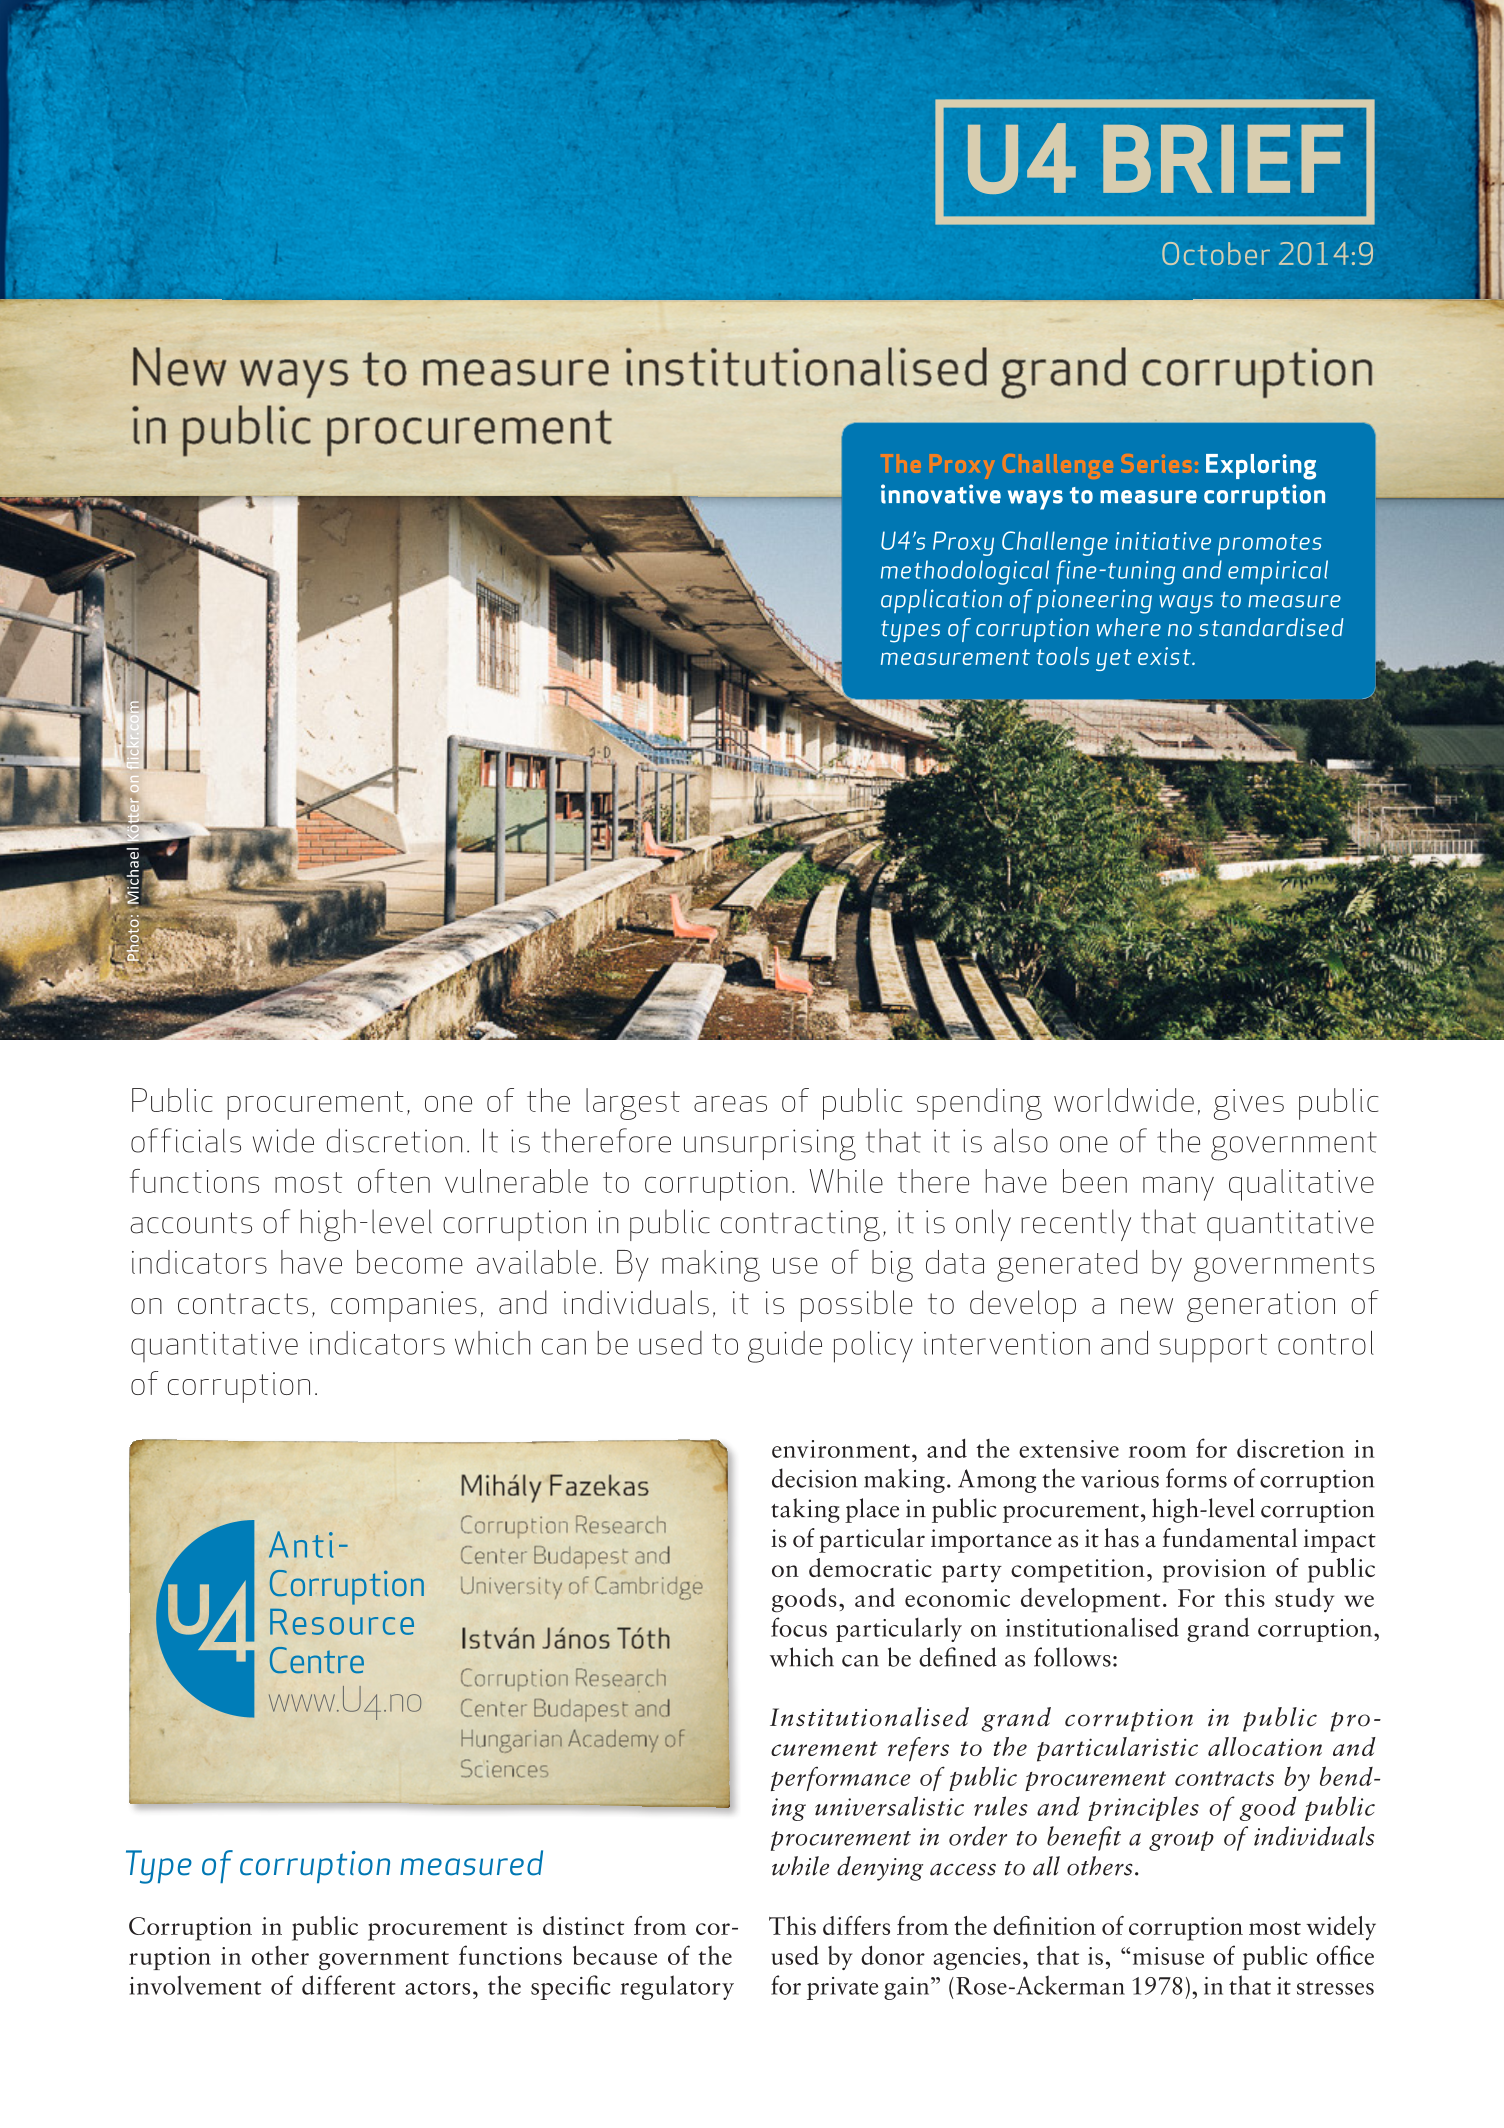 New ways to measure institutionalised grand corruption in public procurement